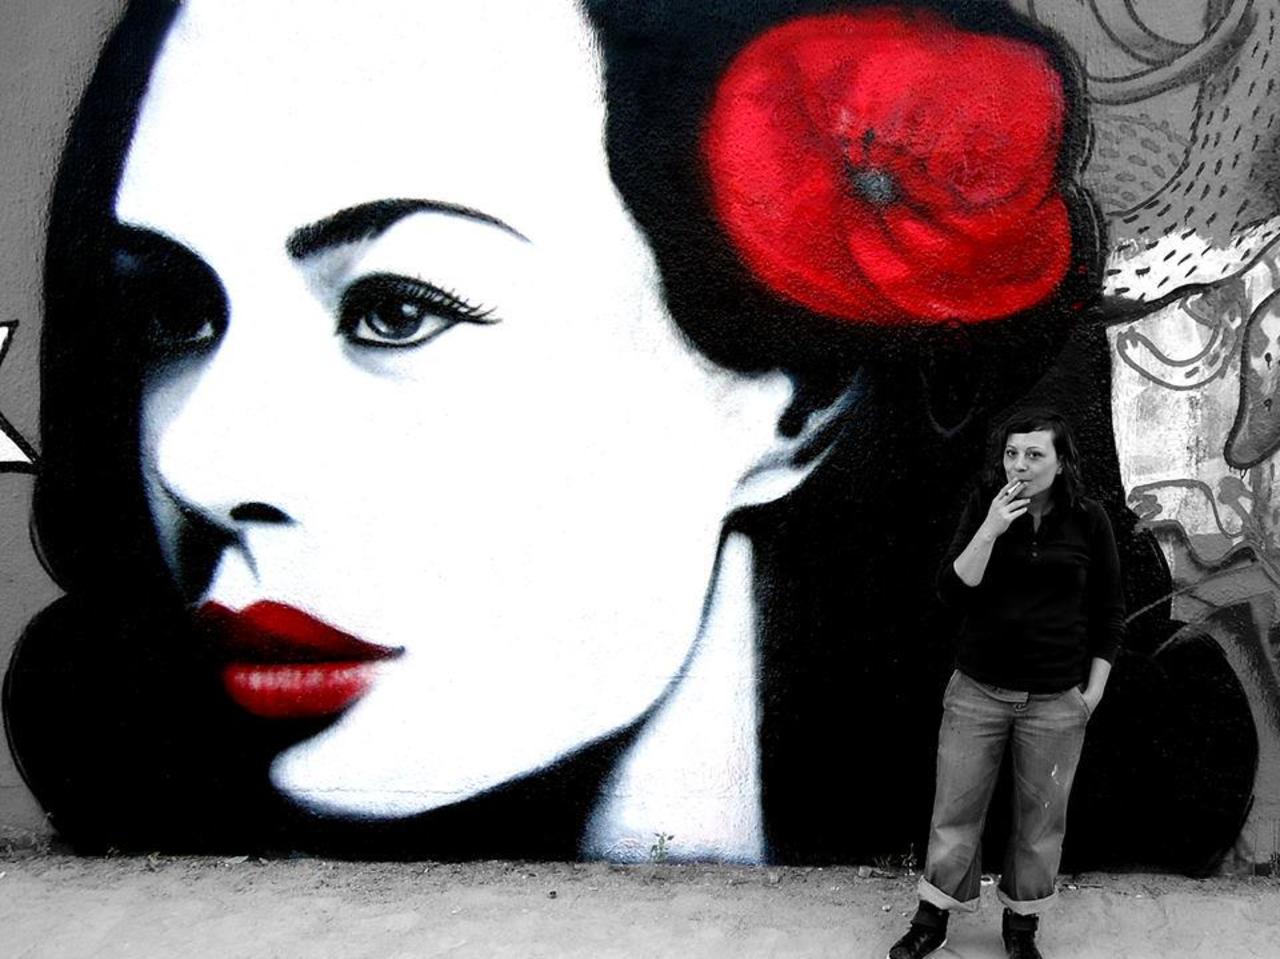 Rencontre #StreetArt avec Kat et ses "portraits de #femmes" #art #urbain via @lumieresdlv > http://urlz.fr/20N6 http://t.co/hwn1h7MuwX